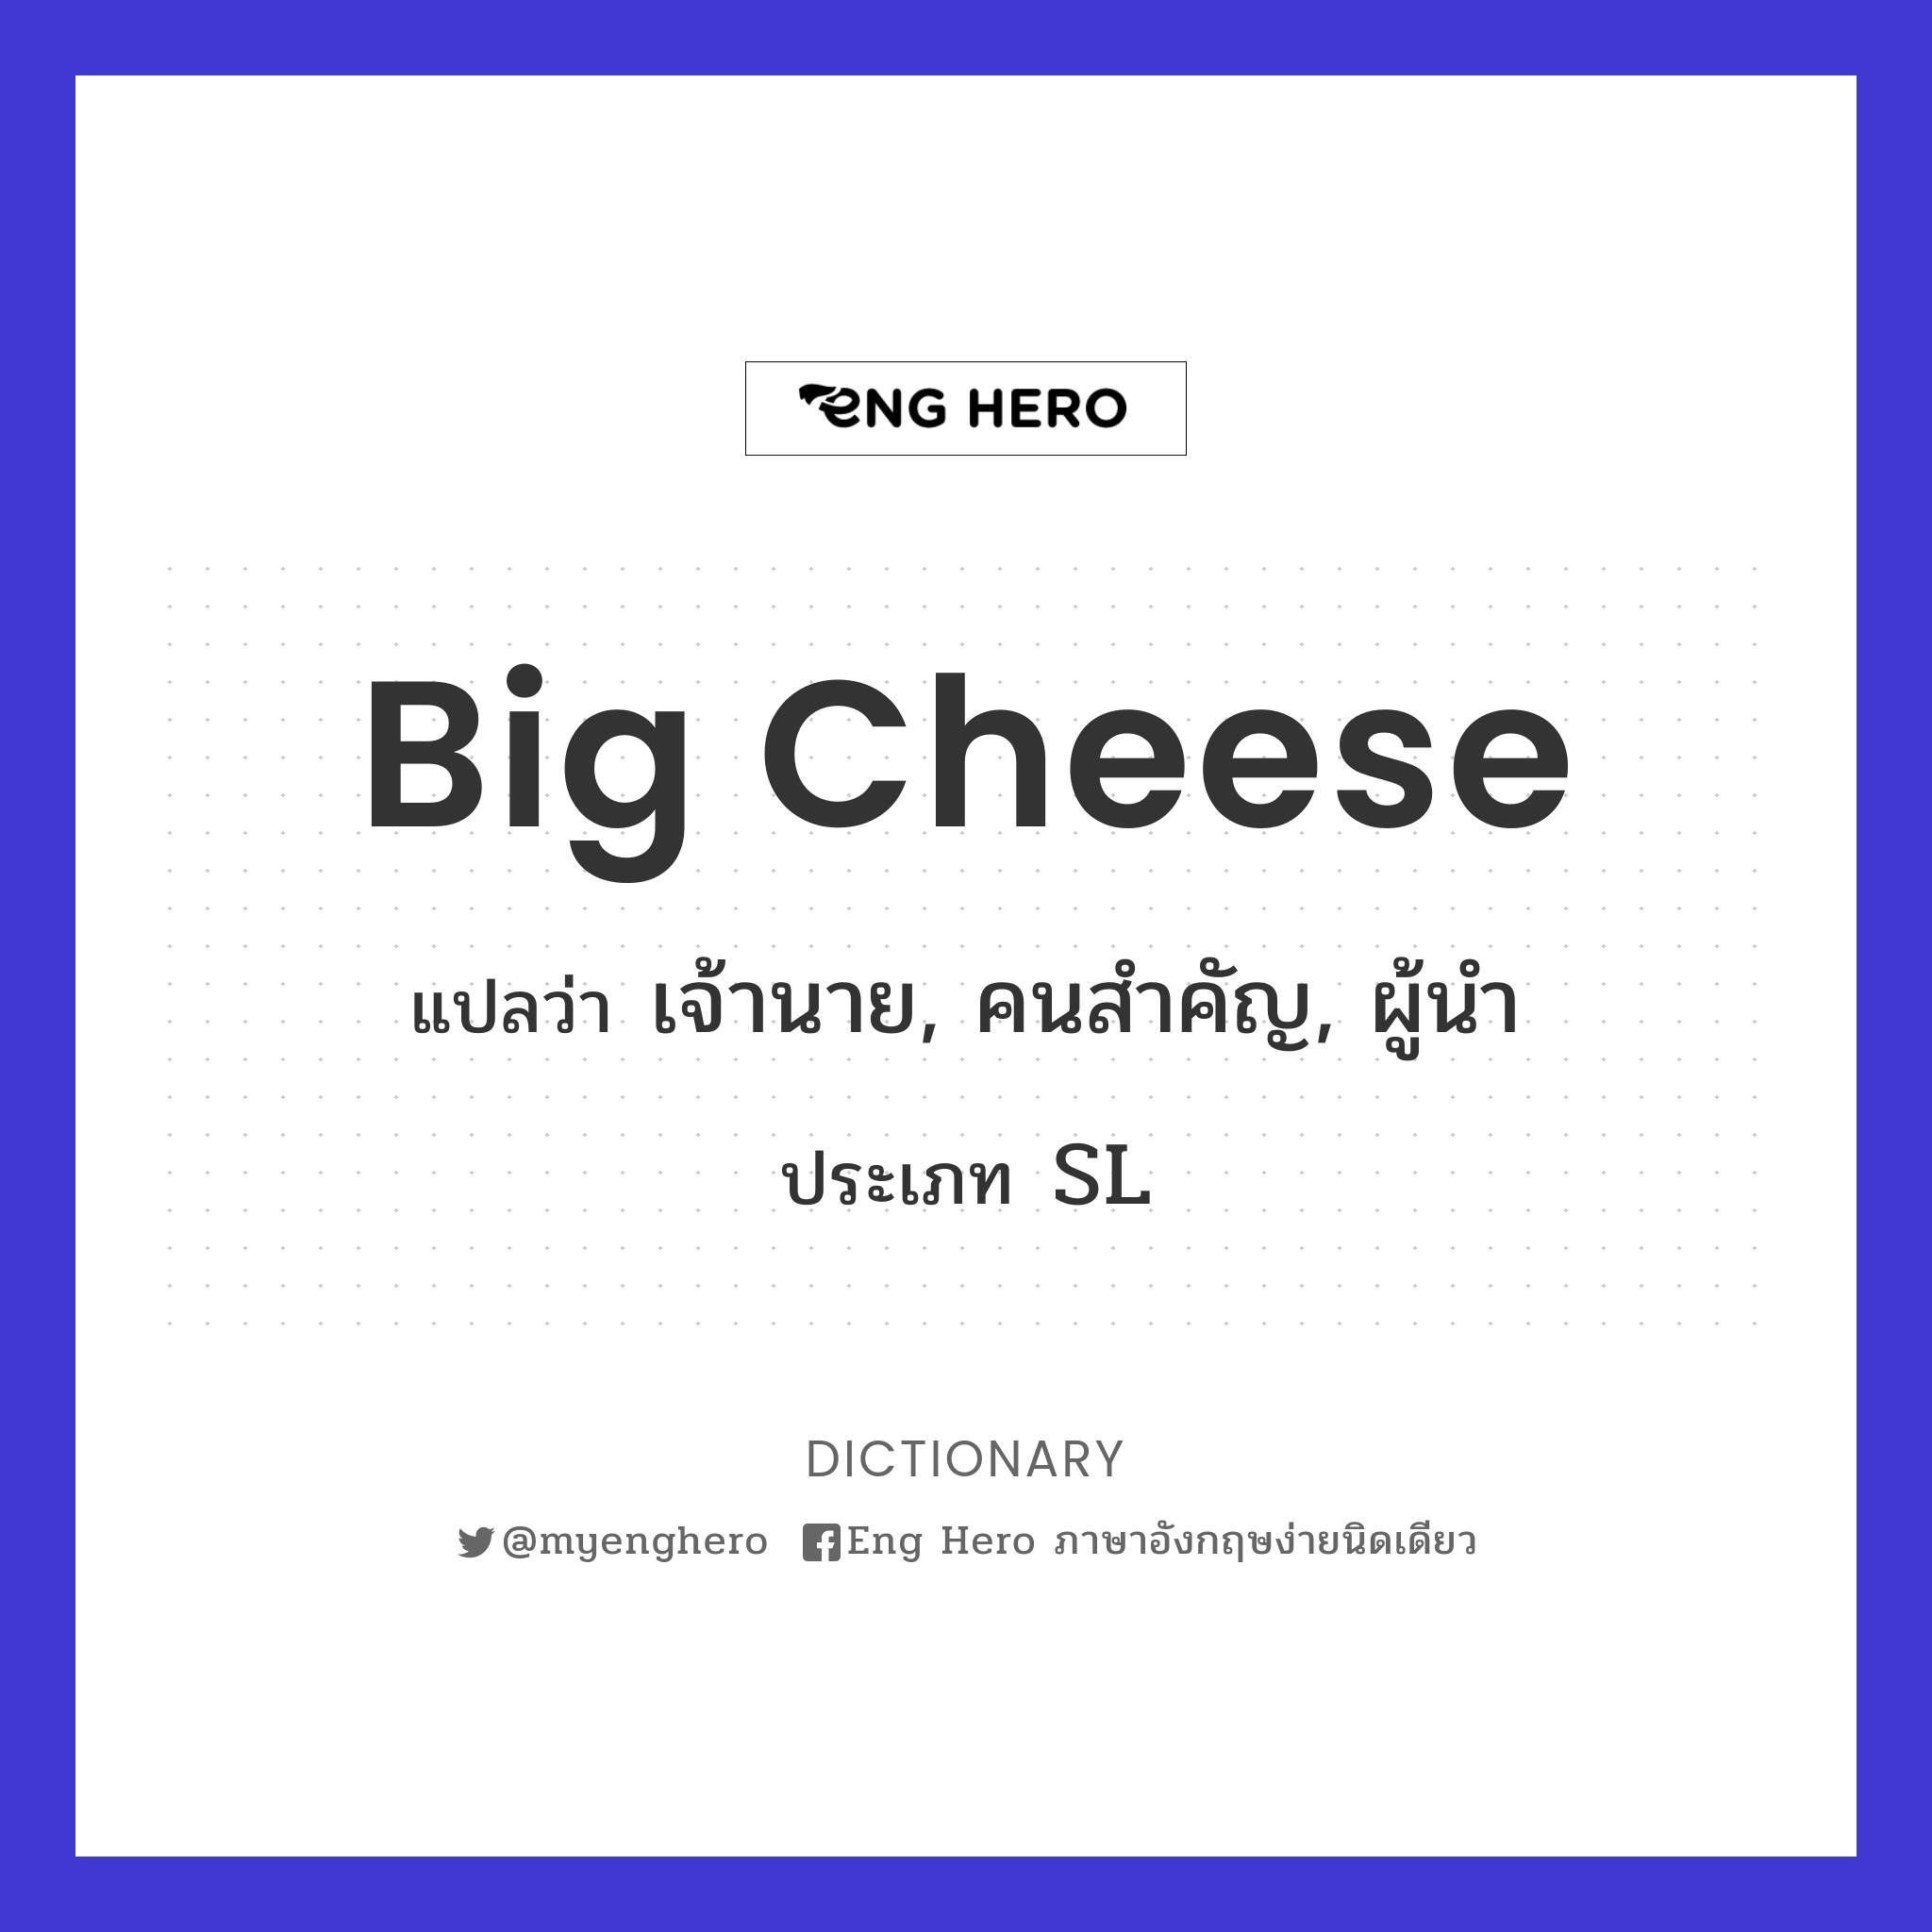 big cheese